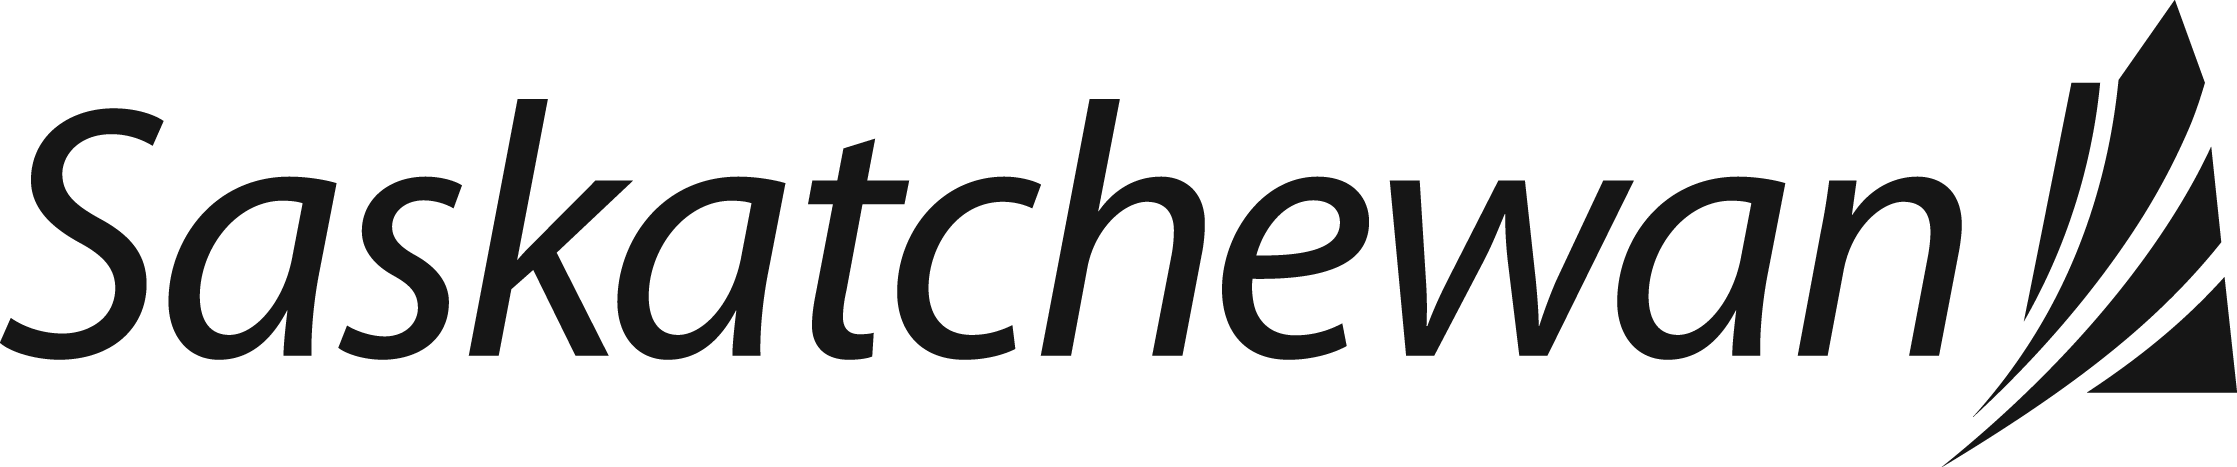 Saskatchewan logo black